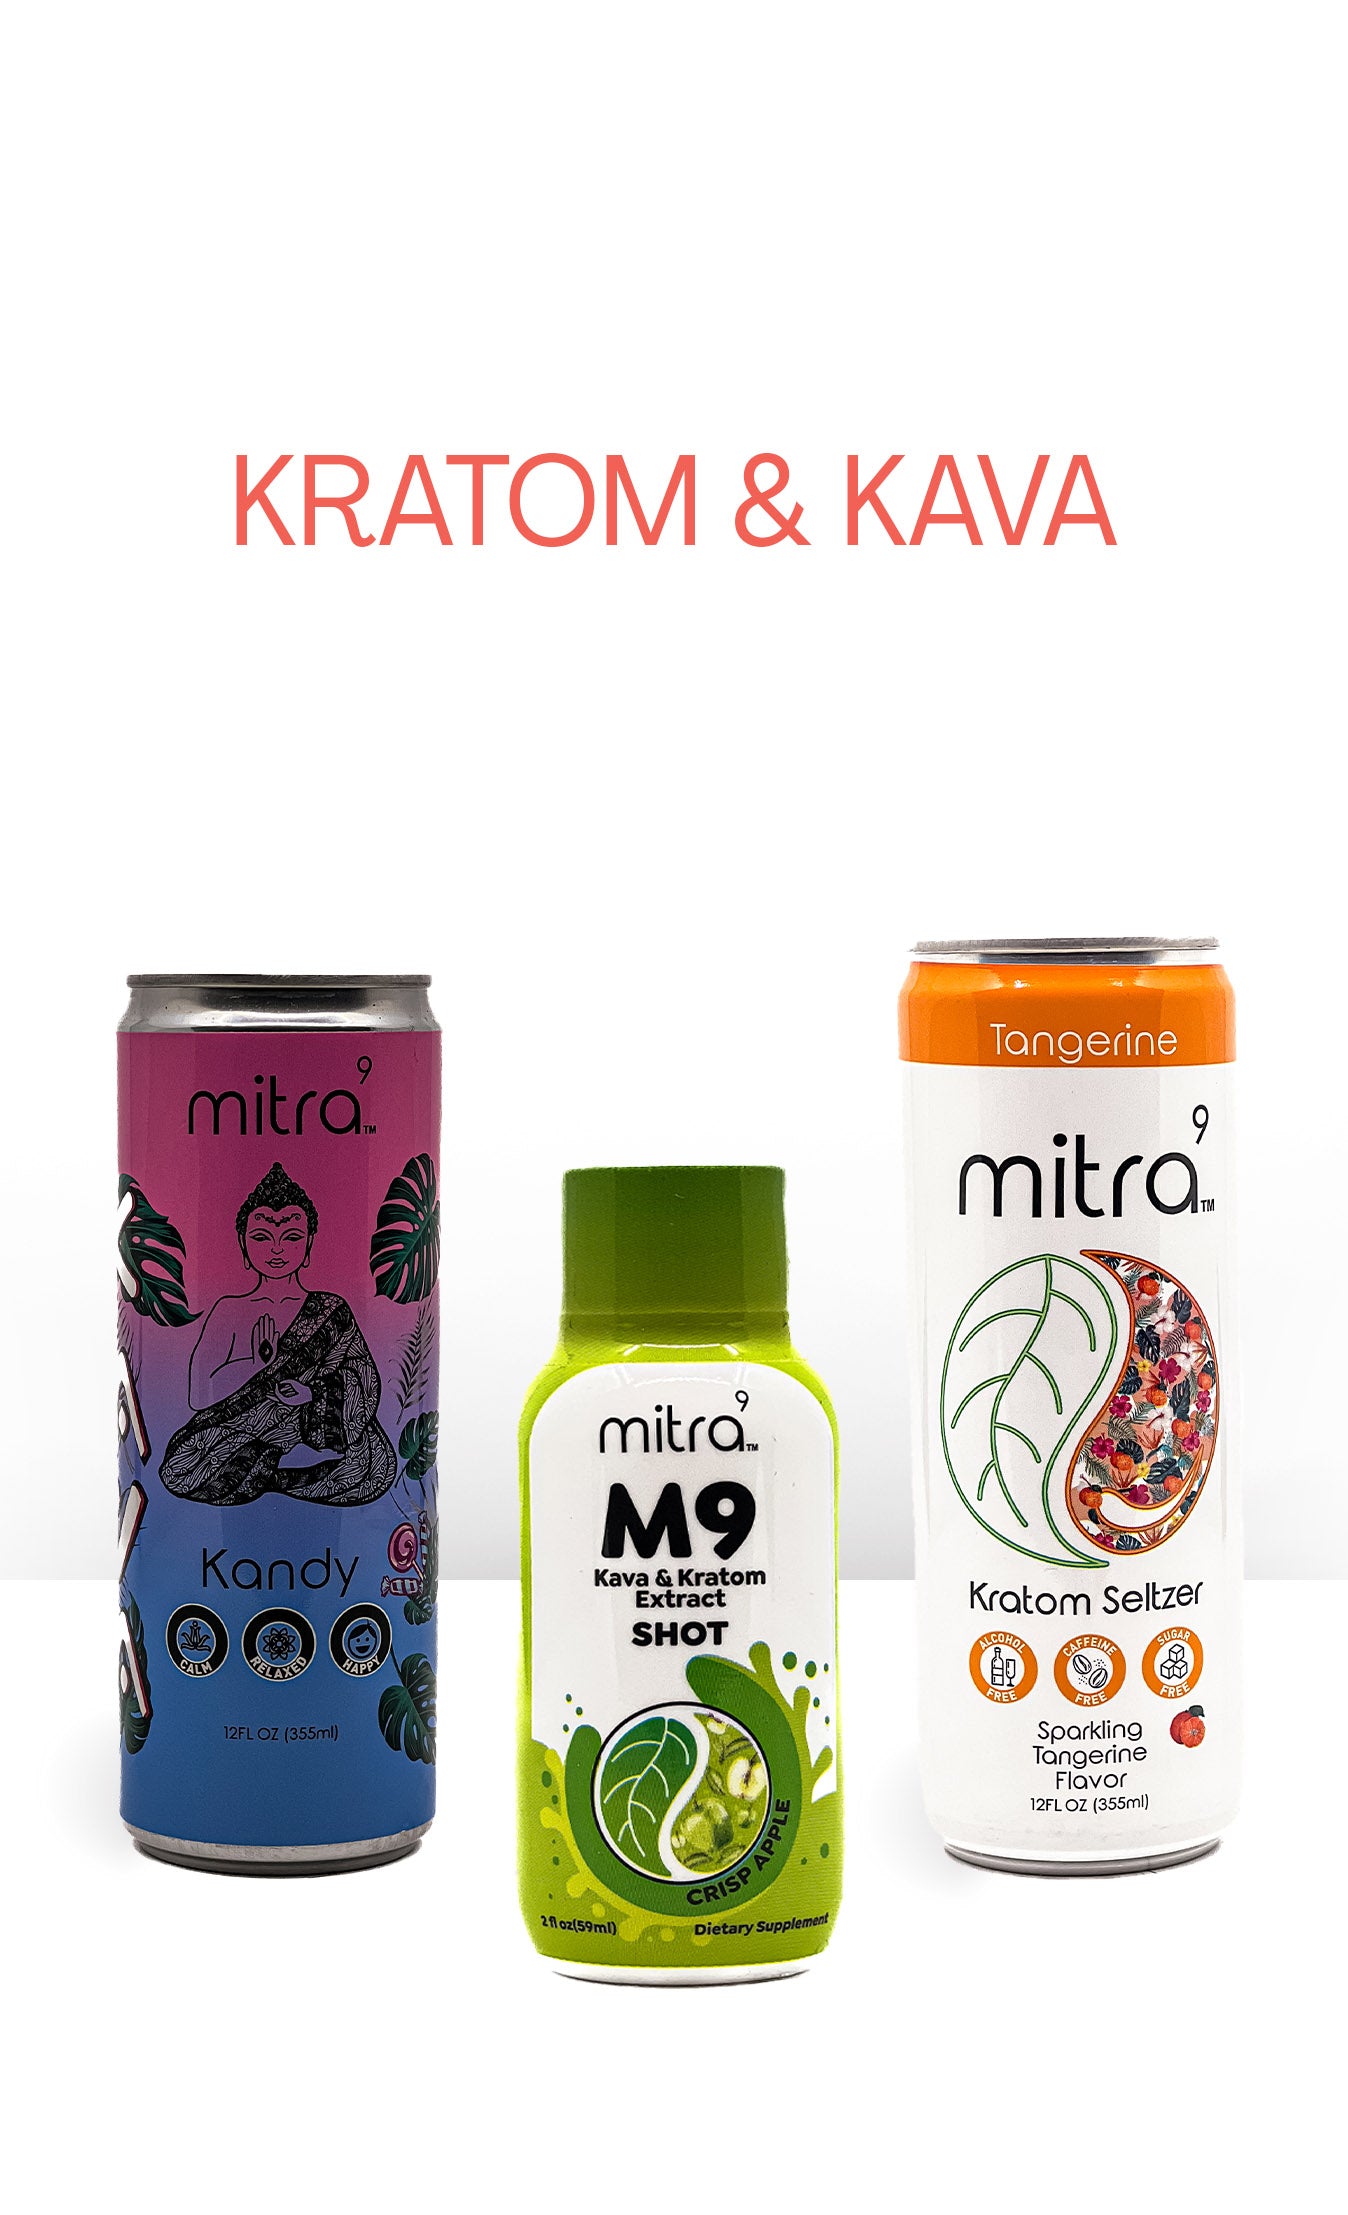 Kratom & Kava